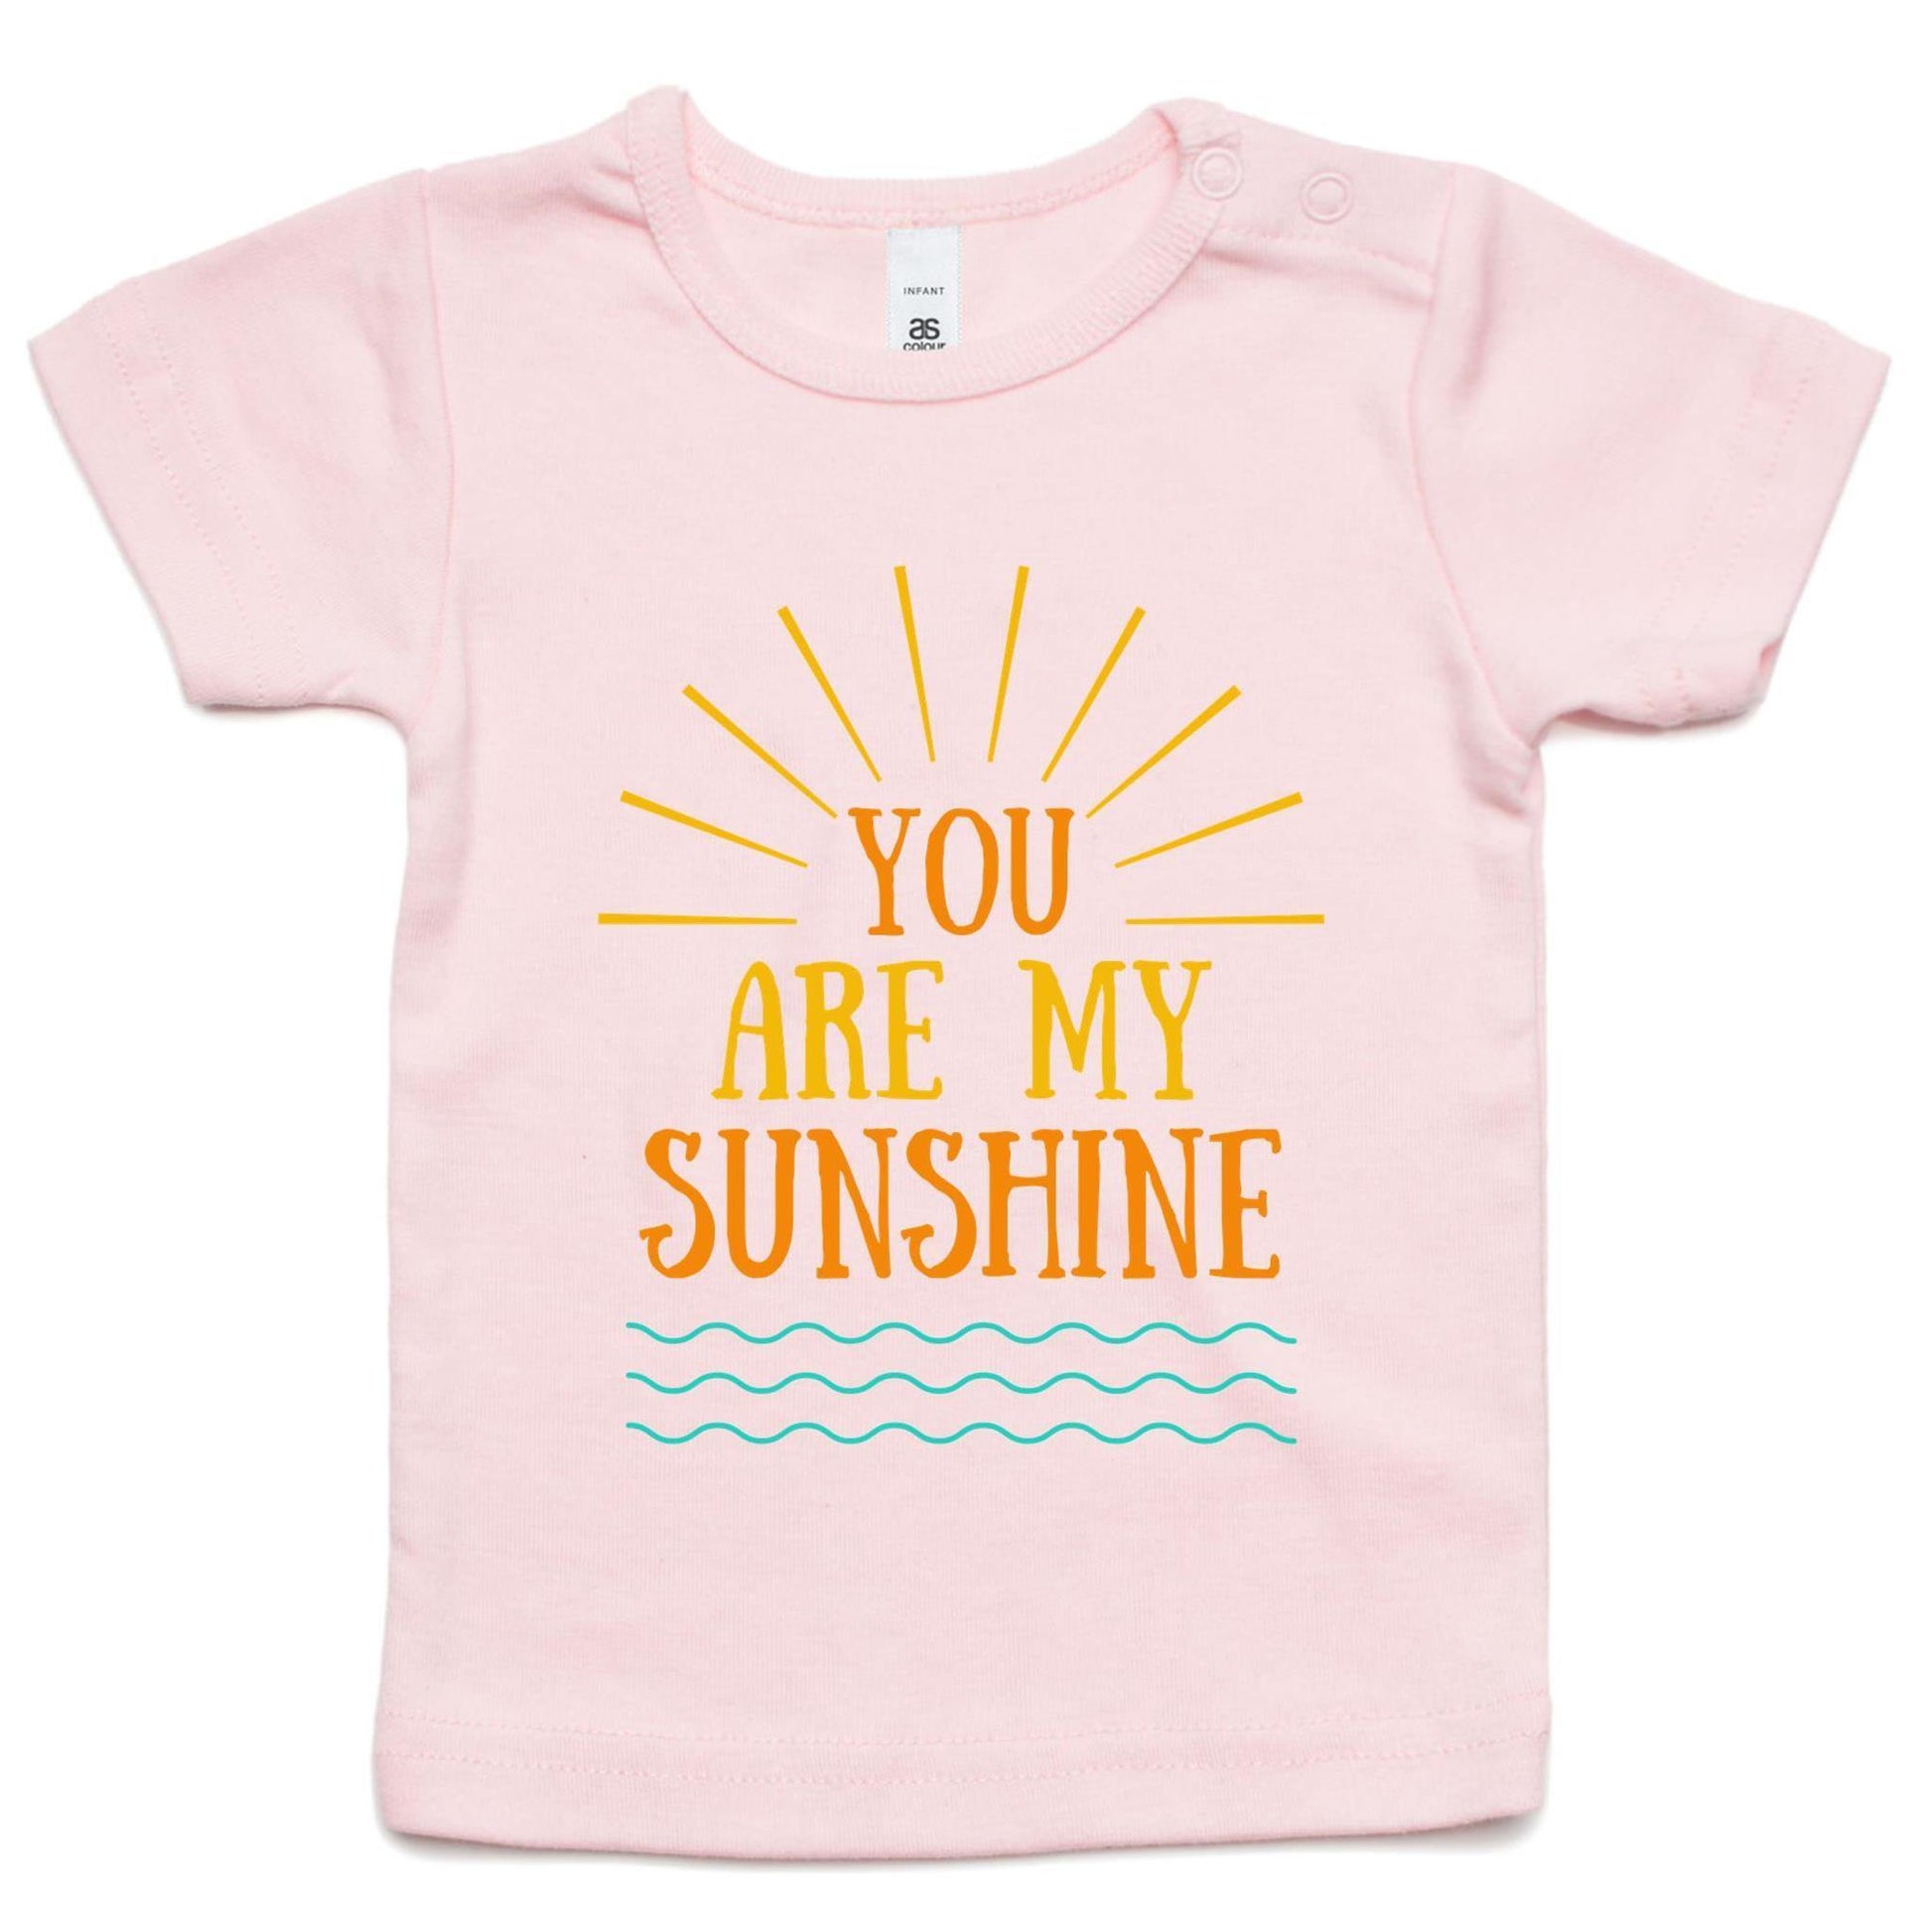 You Are My Sunshine - Baby T-shirt Pink Baby T-shirt kids